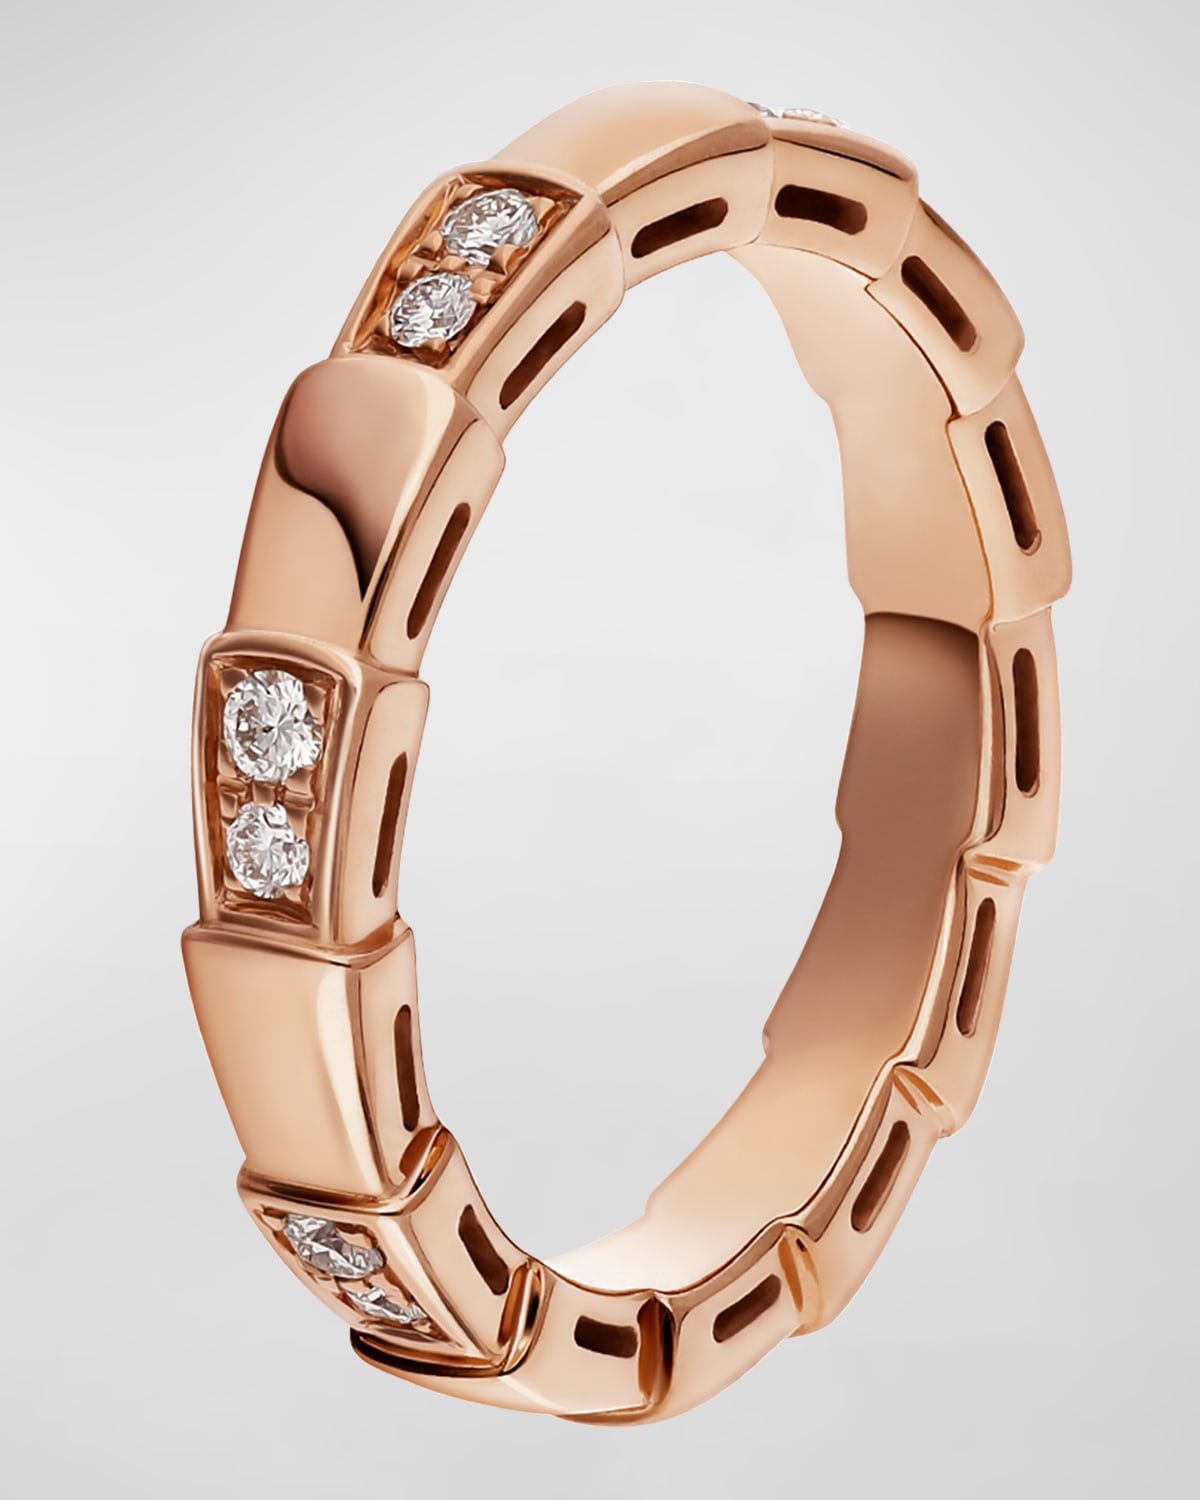 Serpenti Viper Ring in 18k Rose Gold and Diamonds, Size 51